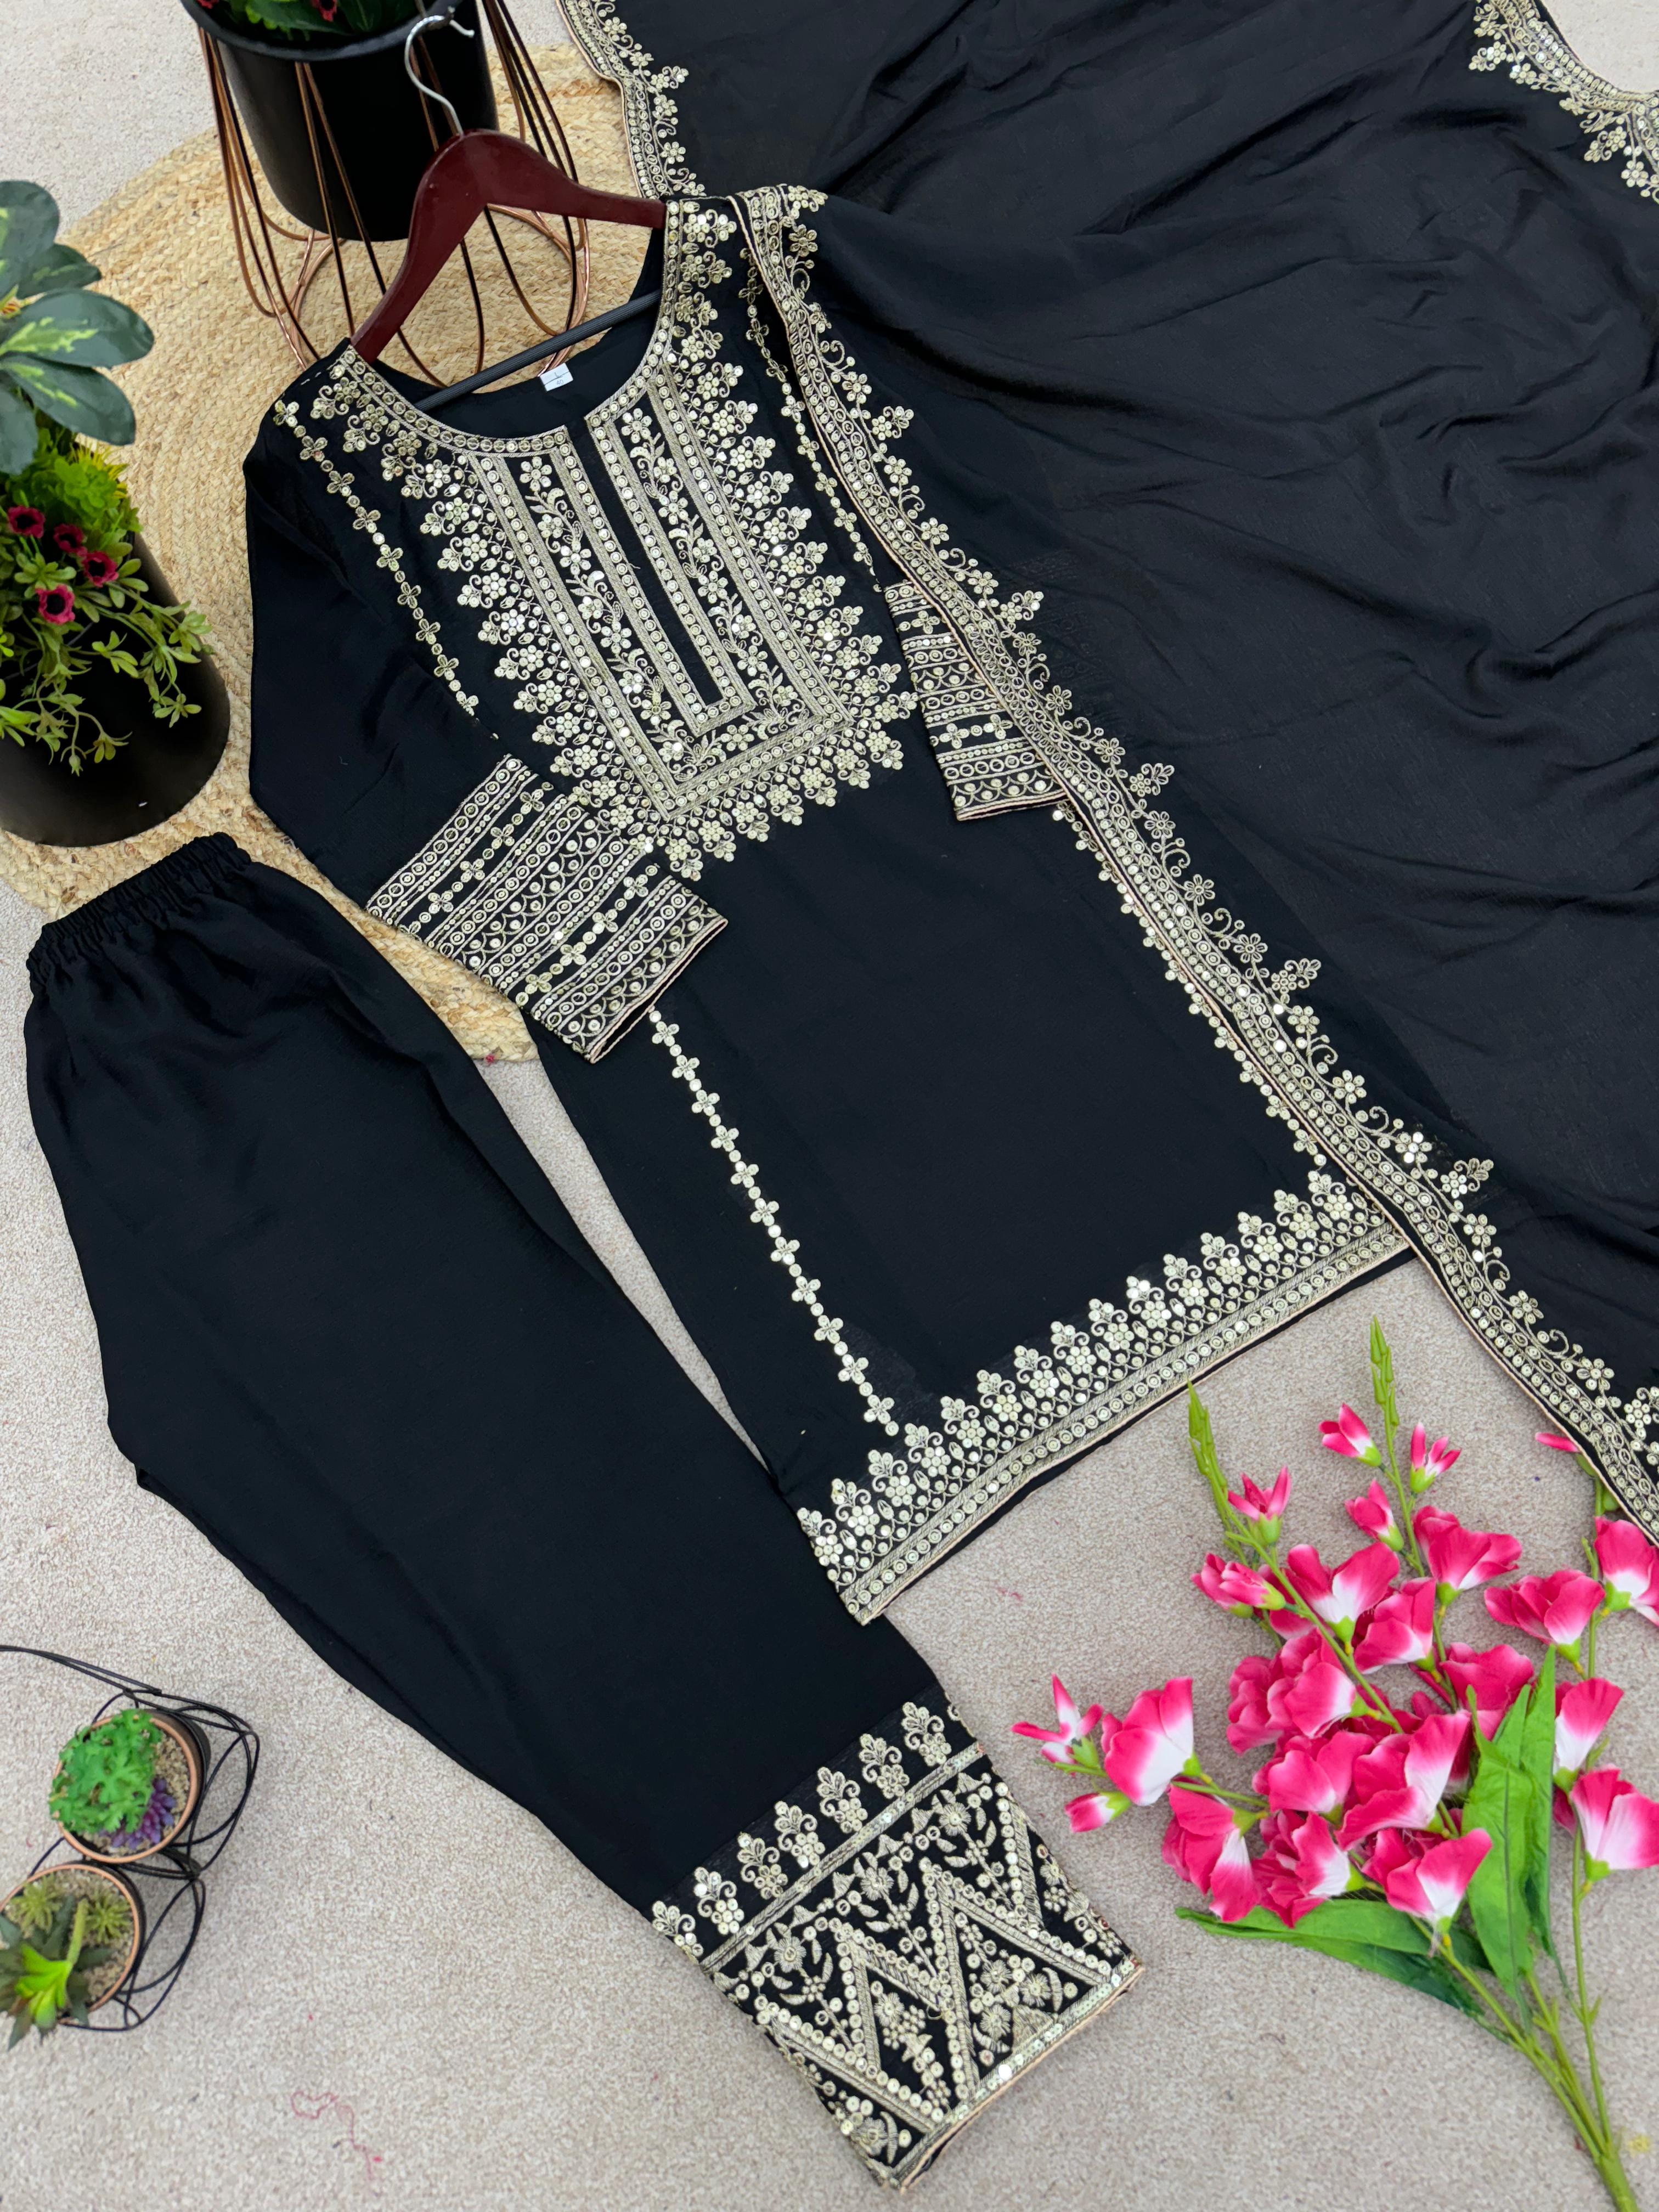 Black Color Full Sleeve Embroidery Work Salwar Suit